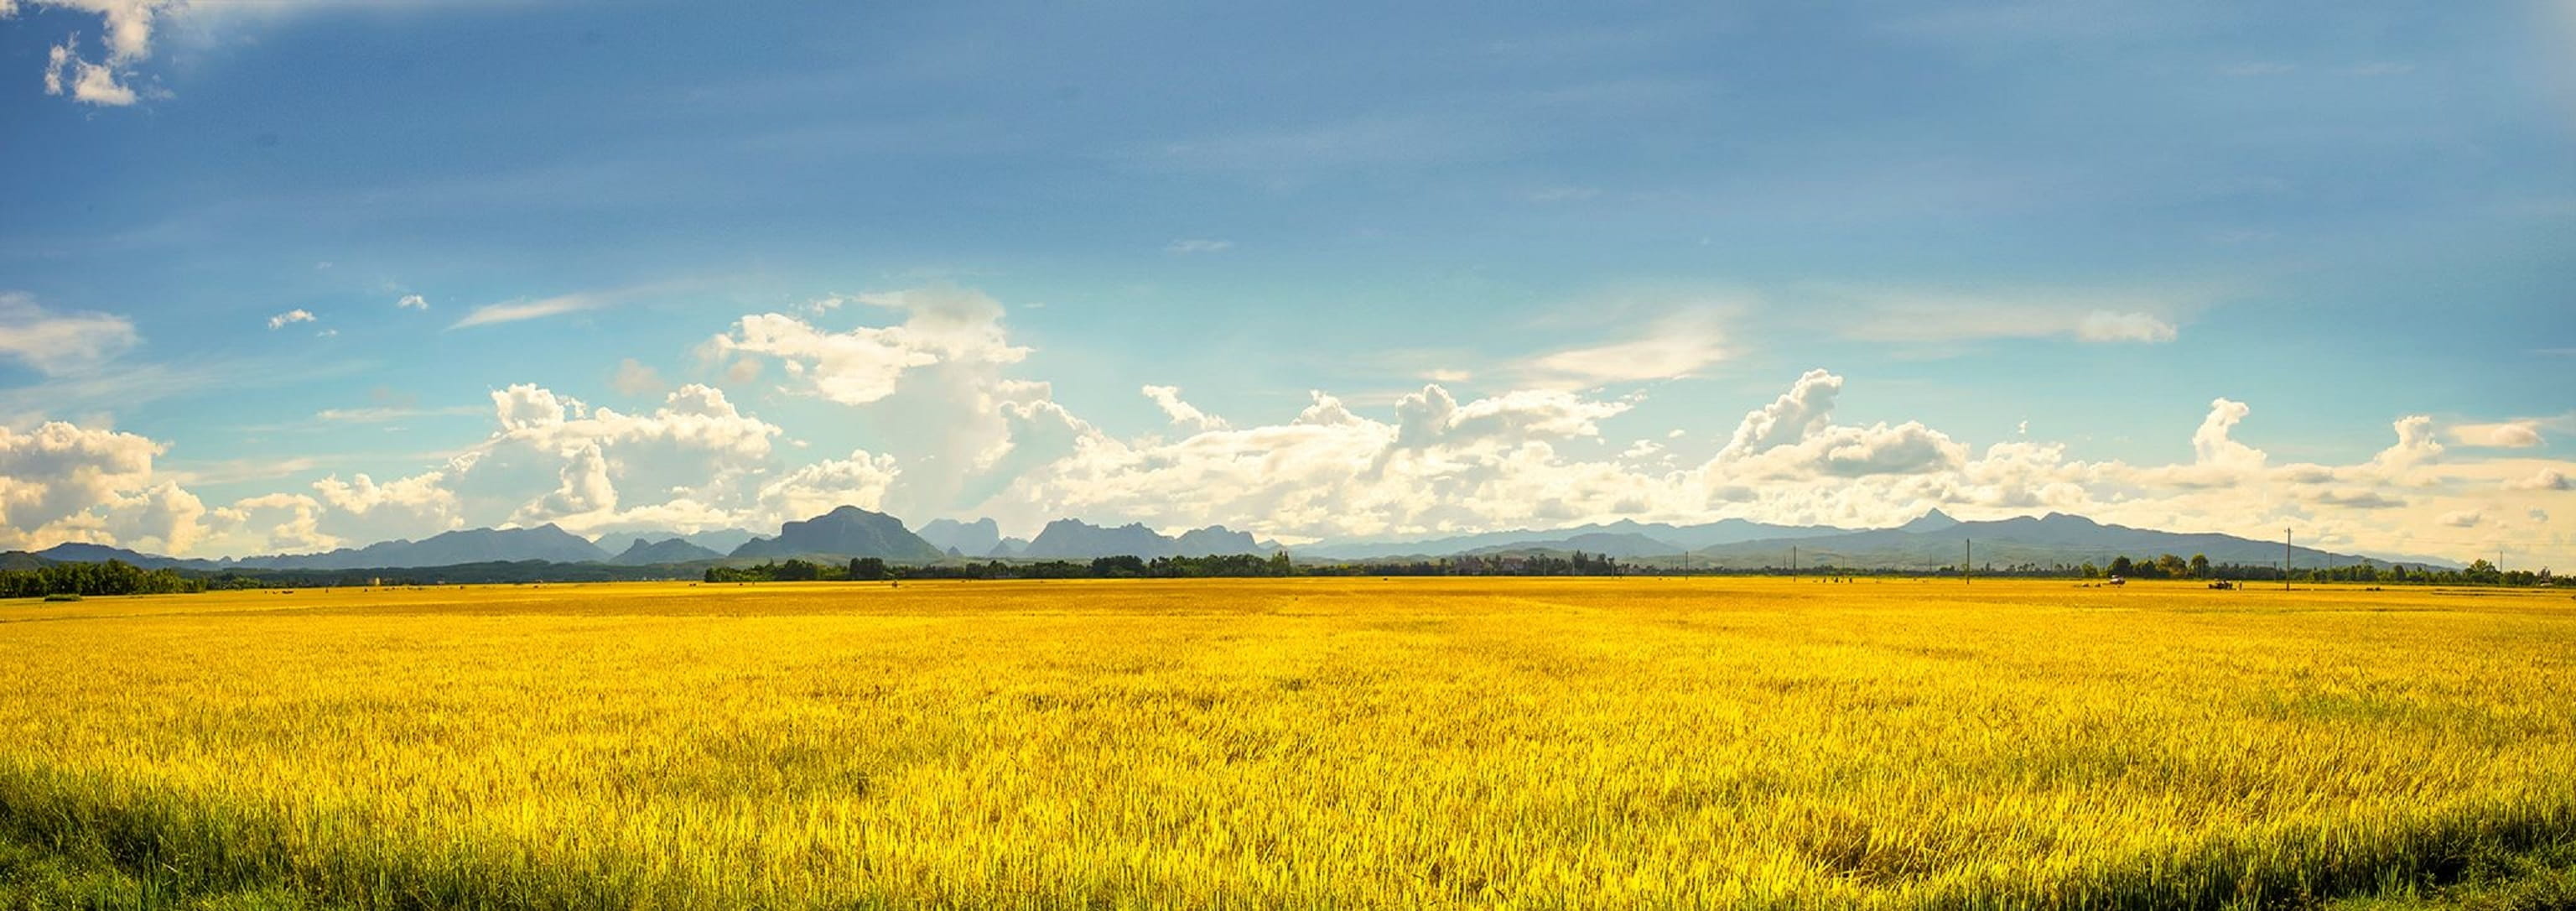 vietnam, agriculture, farm, rice field, gold rice field, farmland